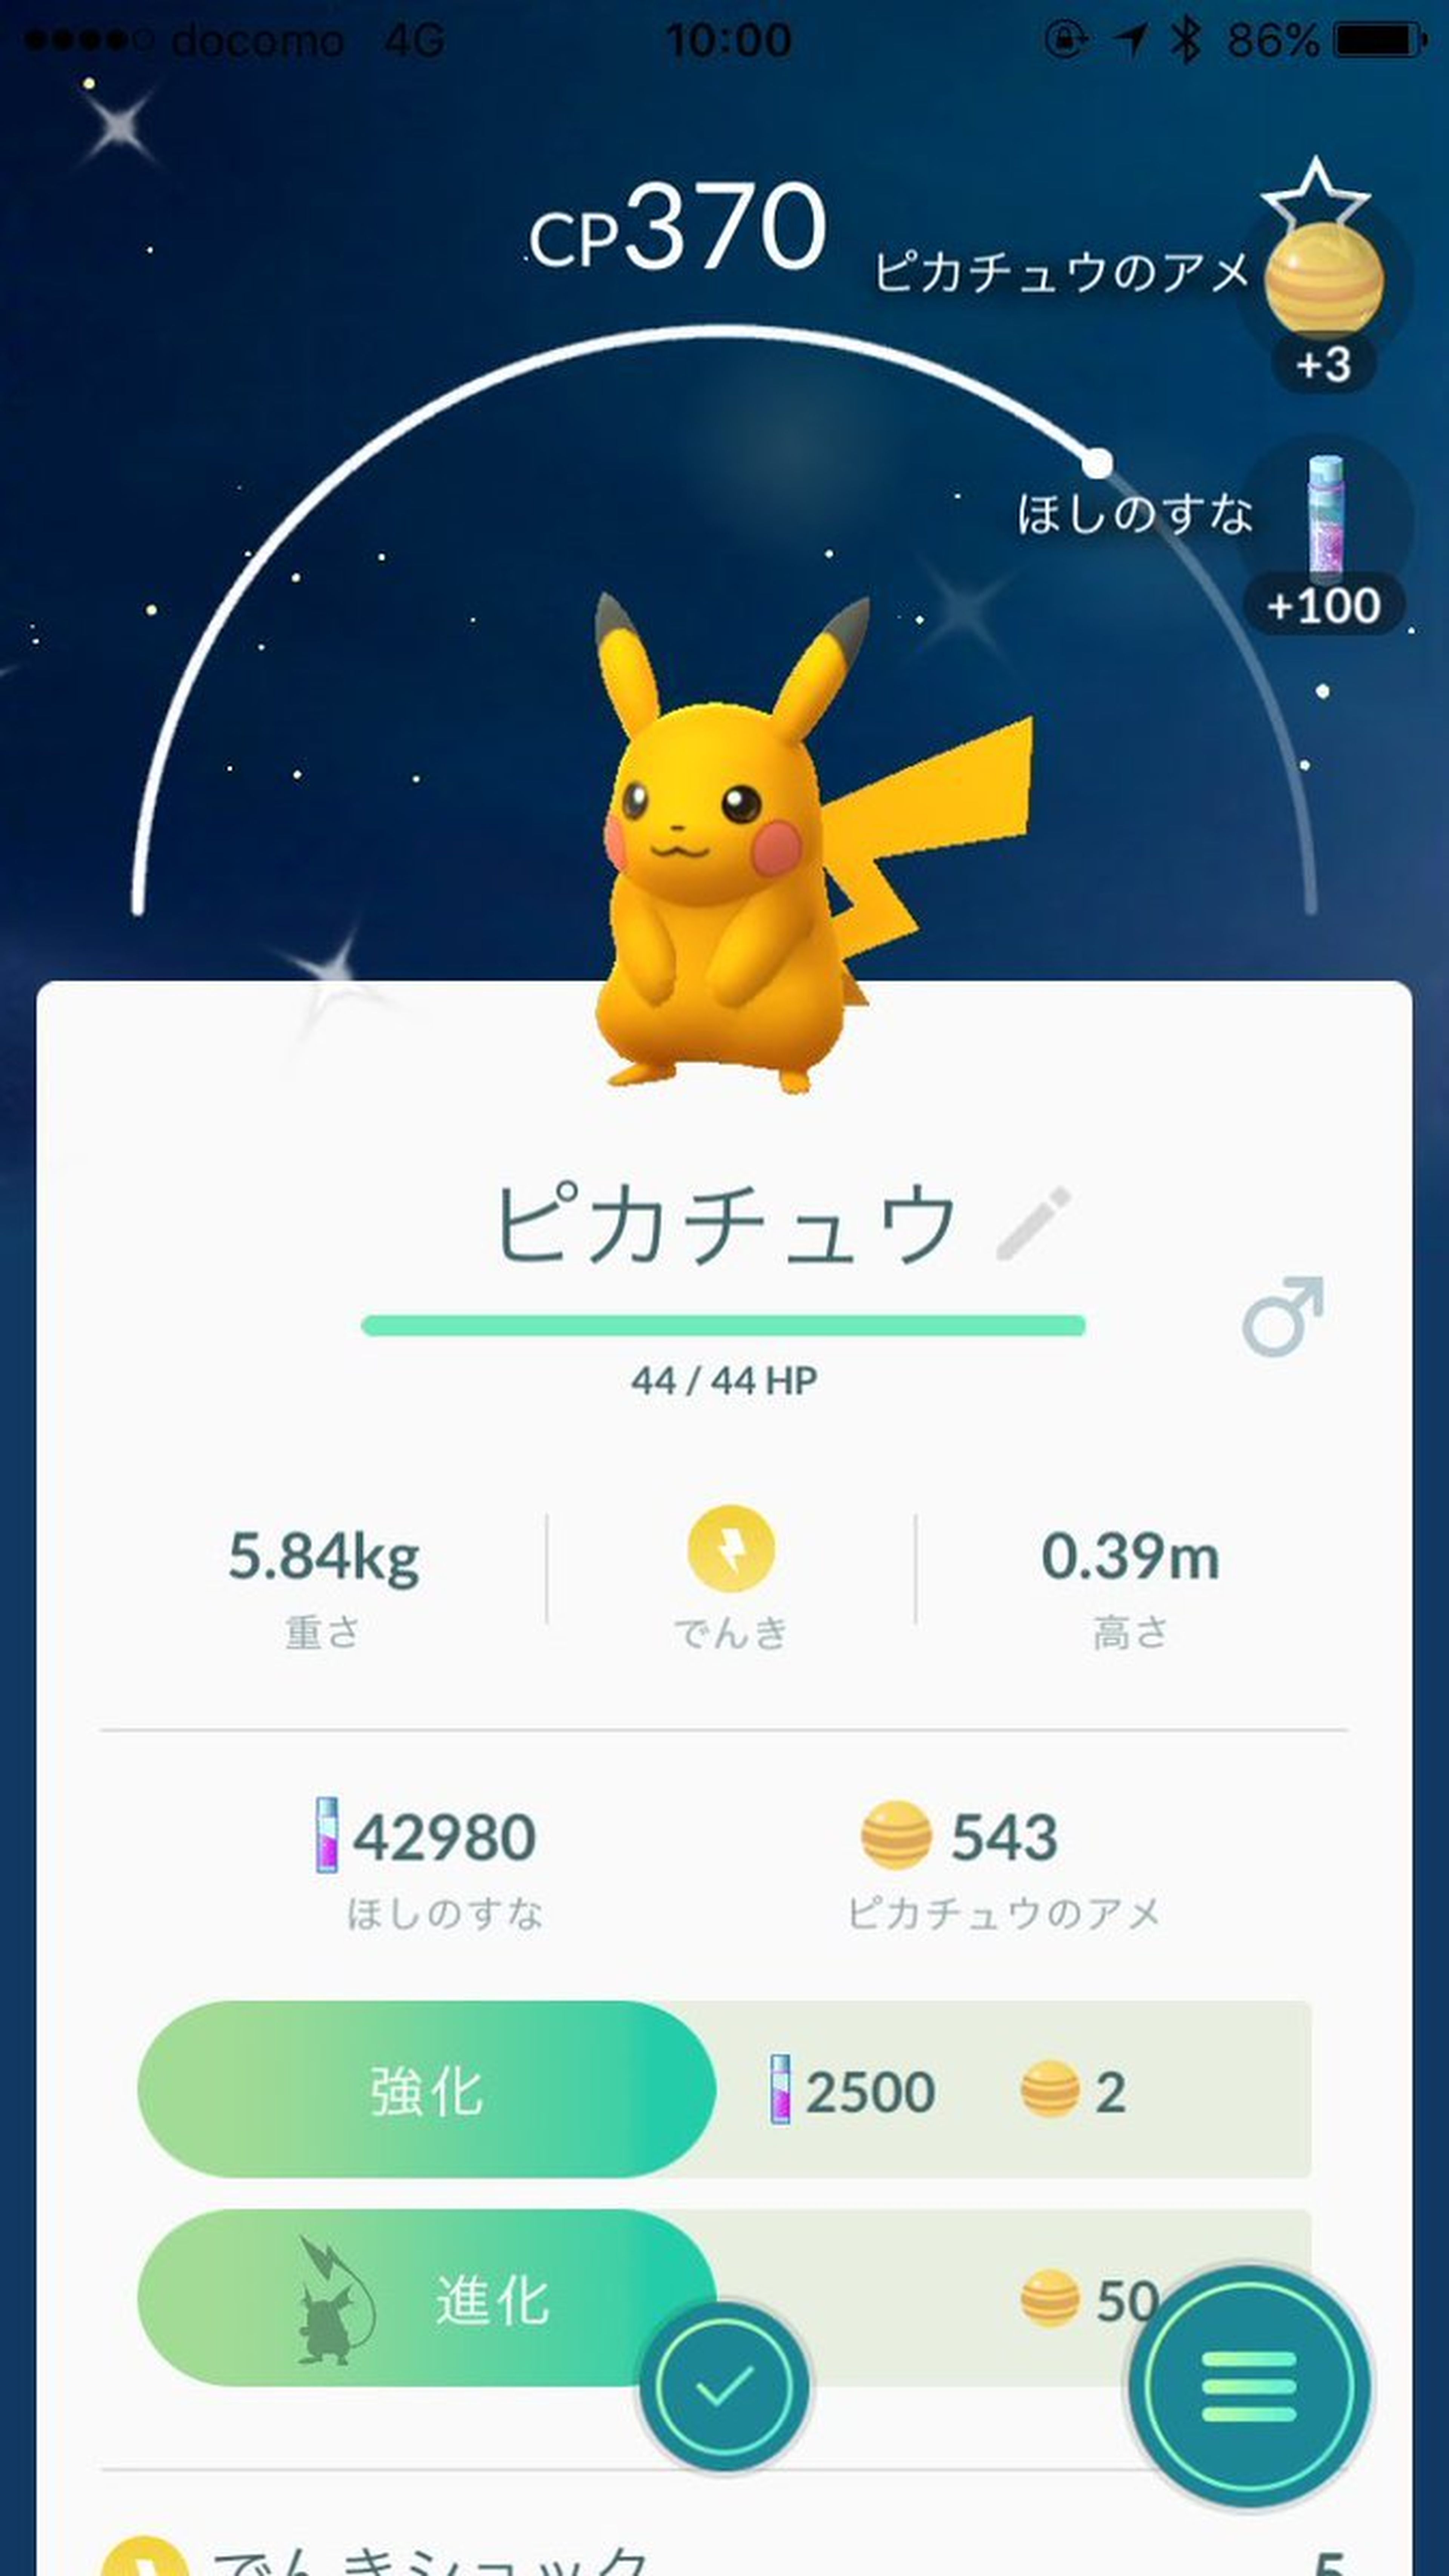 Pikachu brillante en Pokémon GO